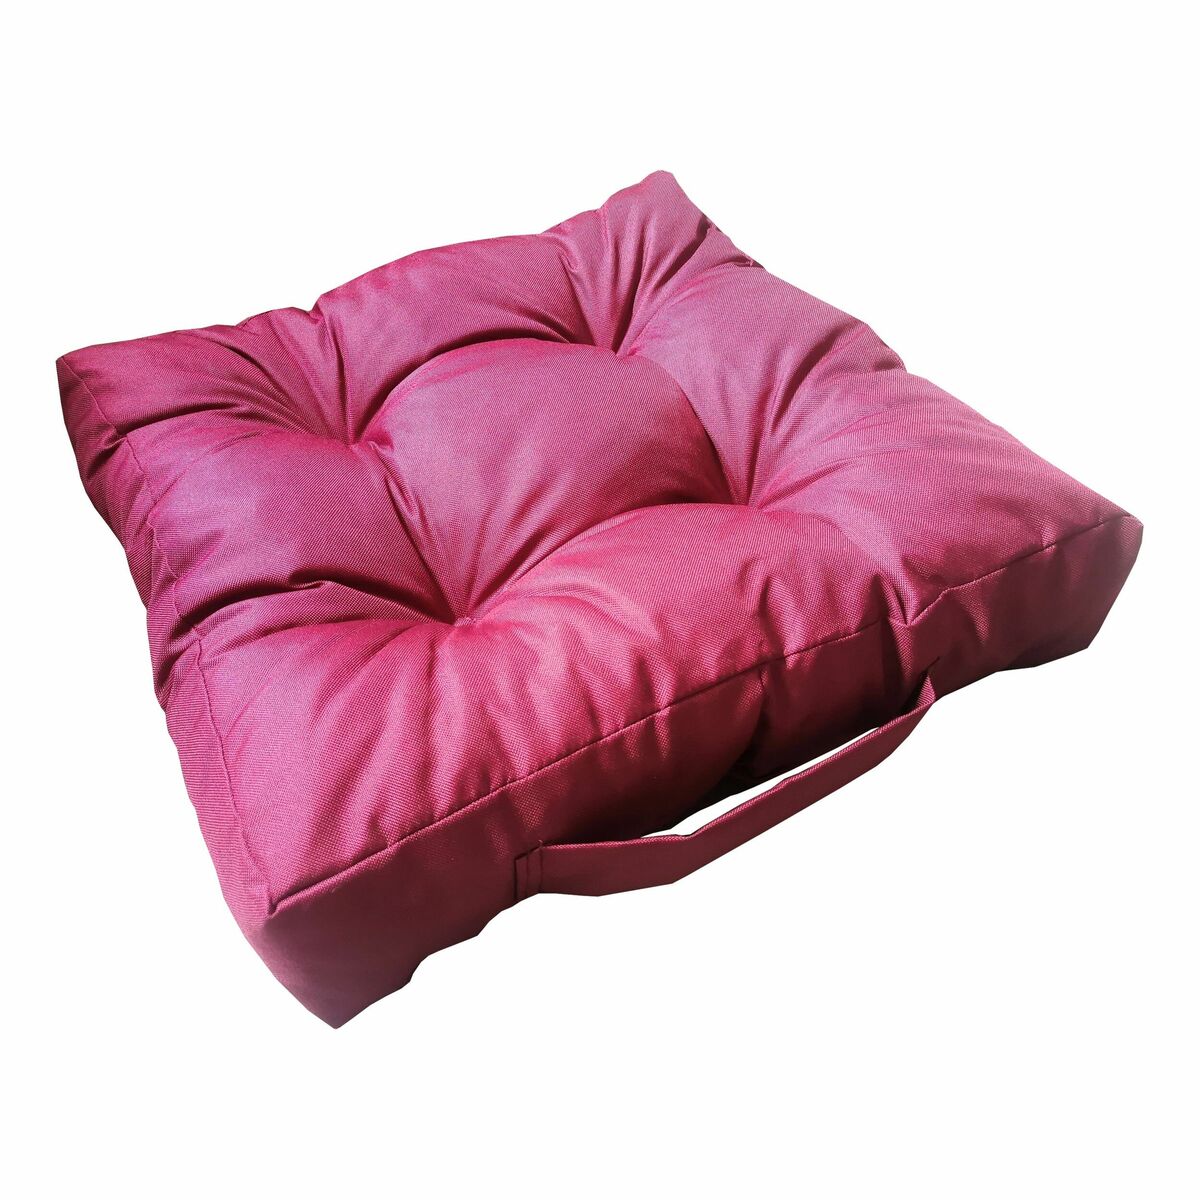 Poduszka materacowa 40x40x6cm różowa Vog